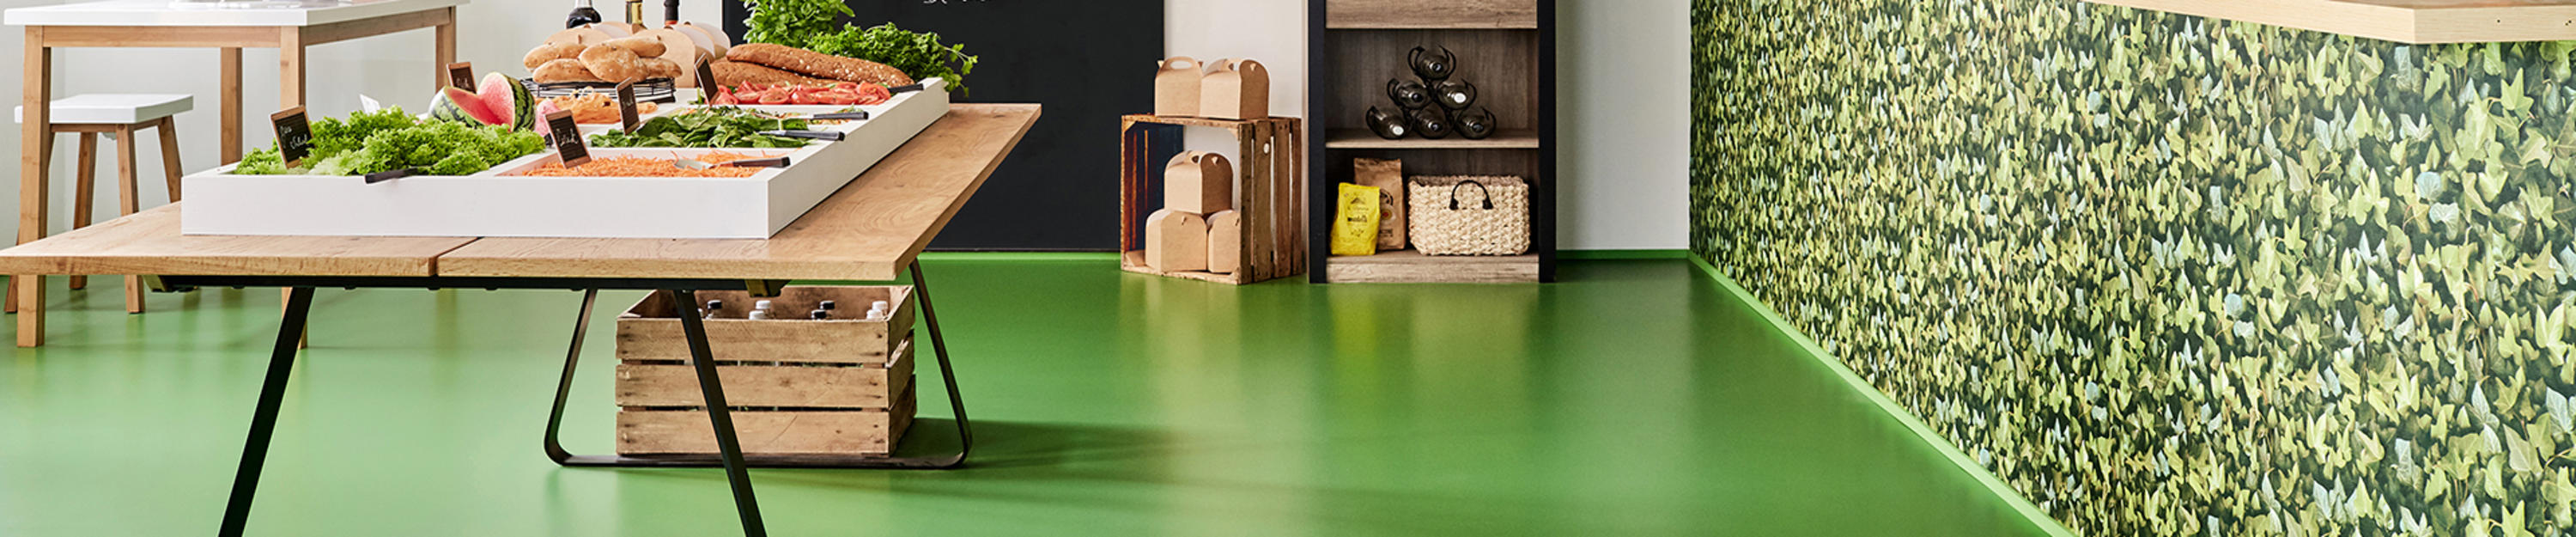 Fraction Dodge Orthodox Linoleum floors: sustainable, durable and beautiful. | Tarkett